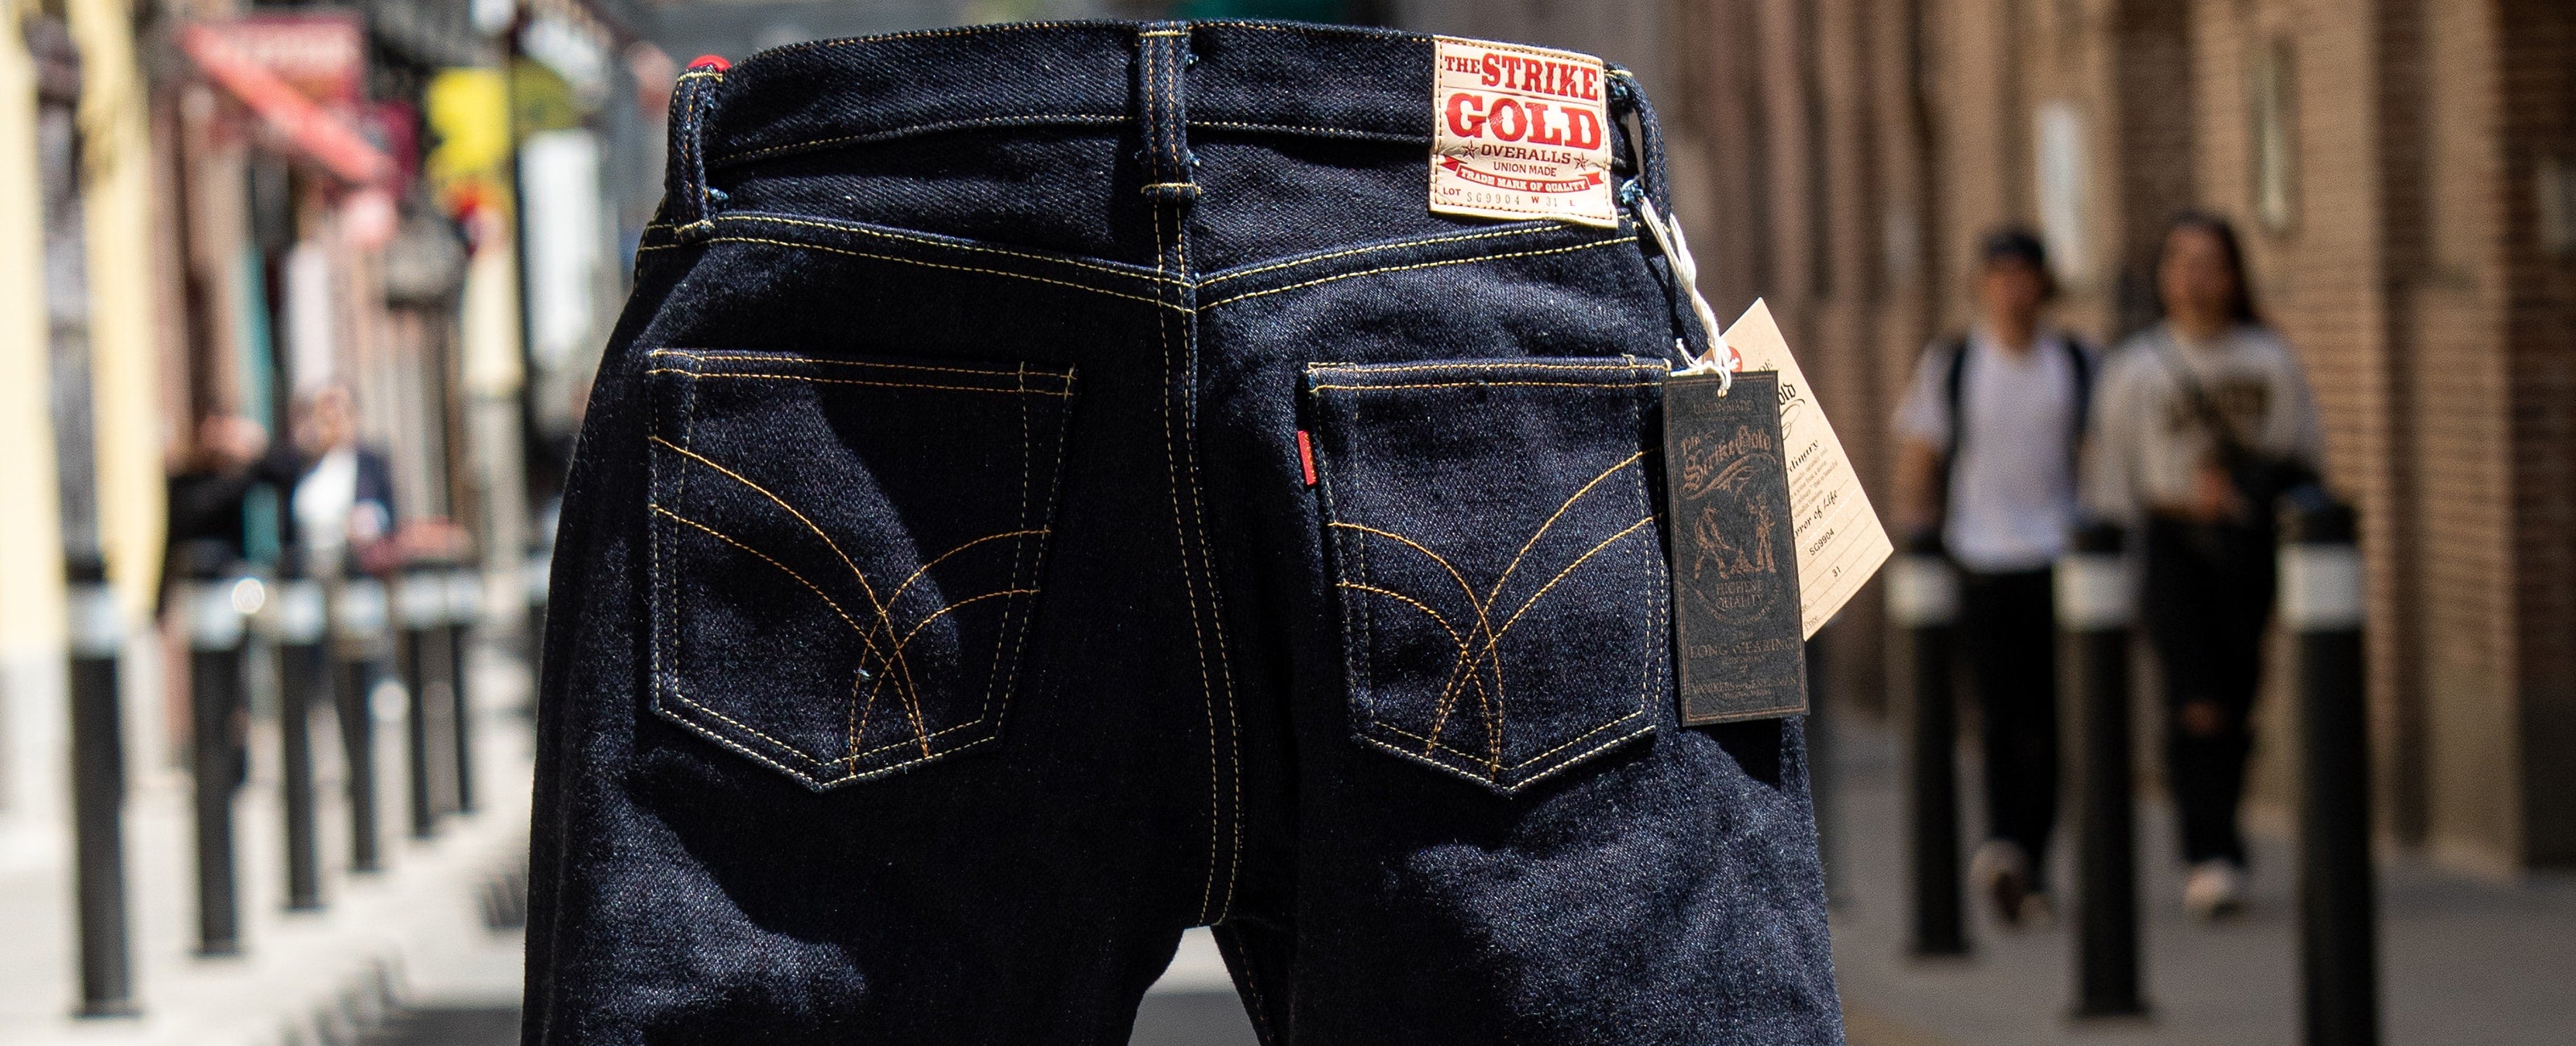 the strike gold ultra hard selvedge Japanese jeans